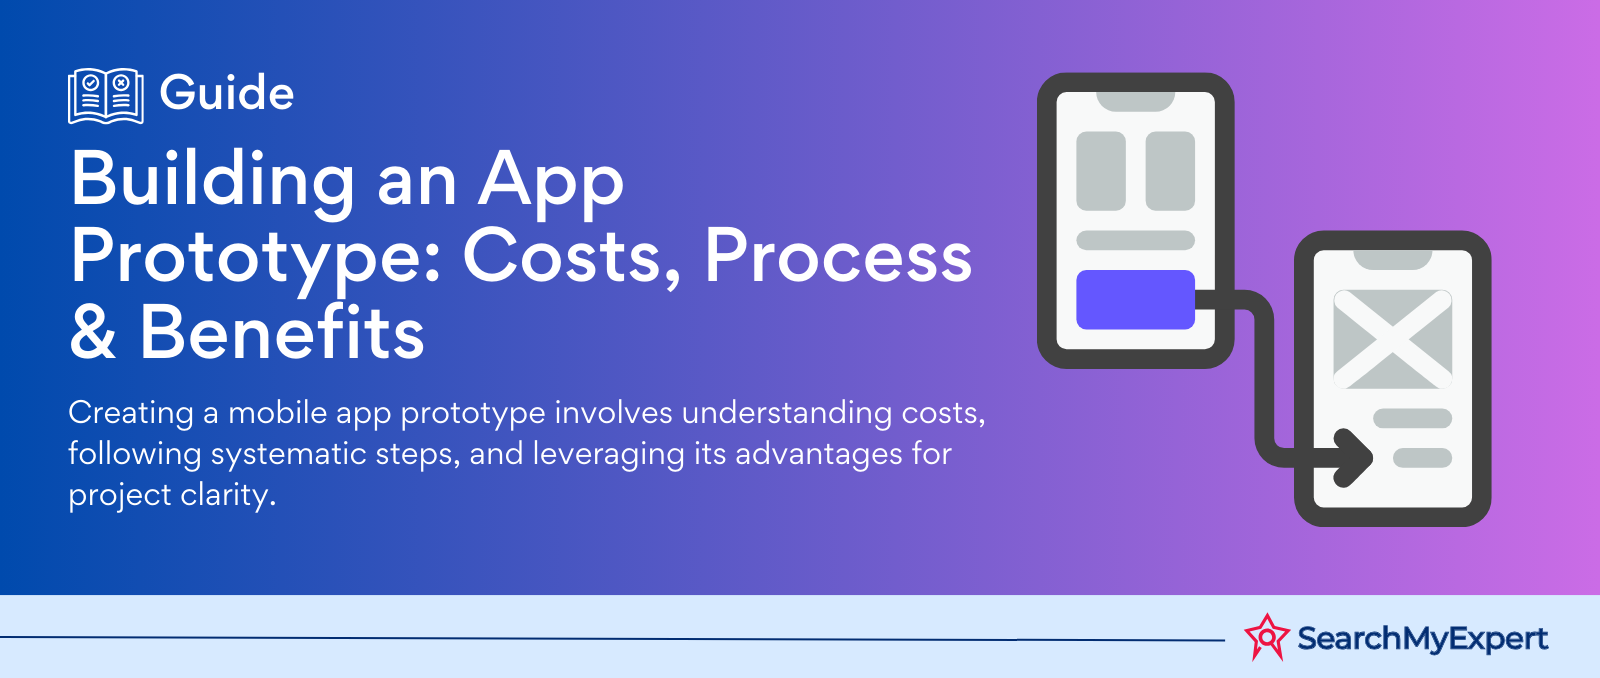 Building an App Prototype: Costs, Process & Benefits